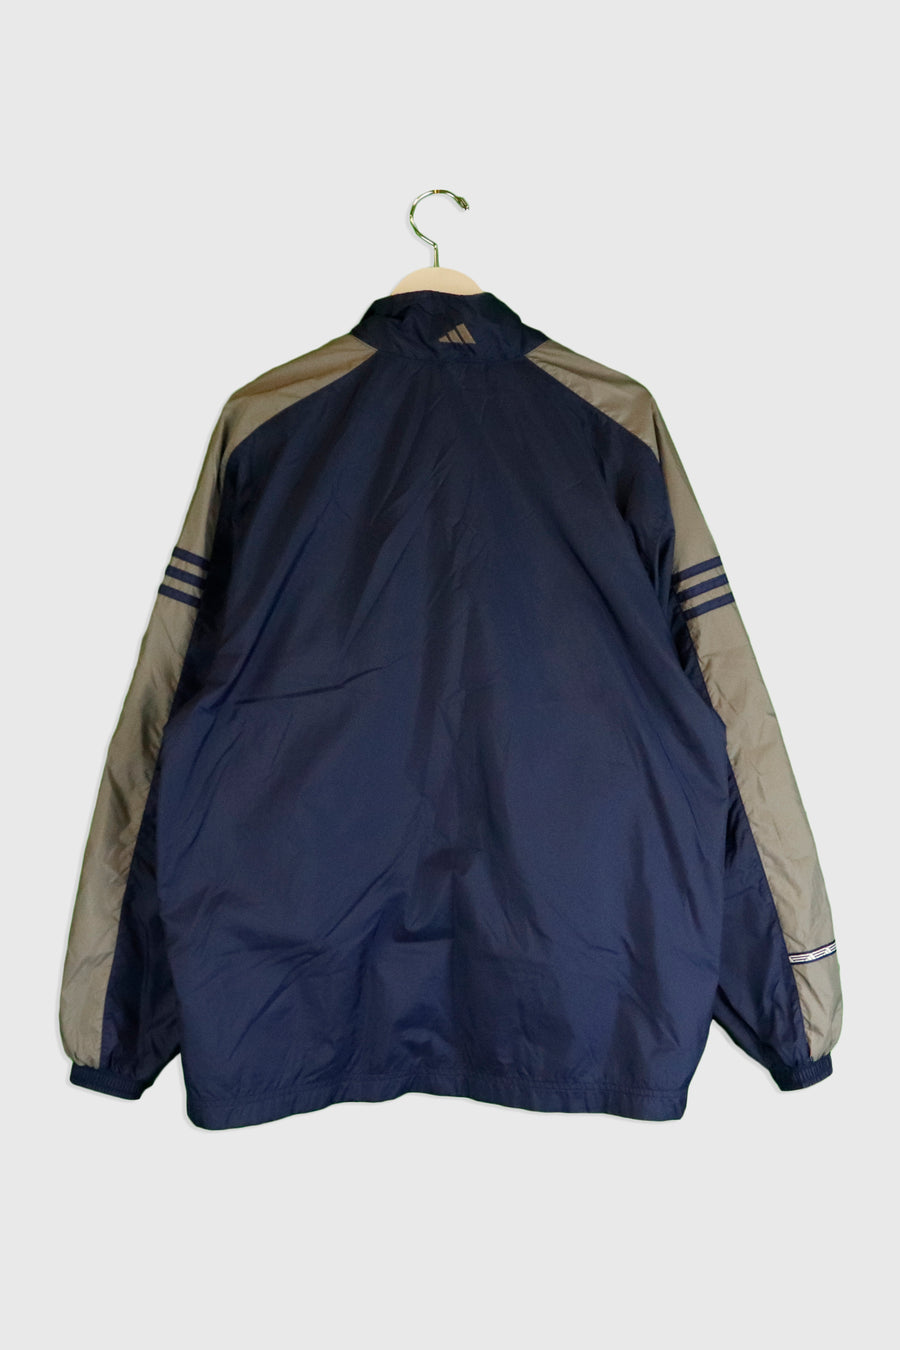 Vintage Adidas Full Zip Striped Two Toned Rain jacket Sz S